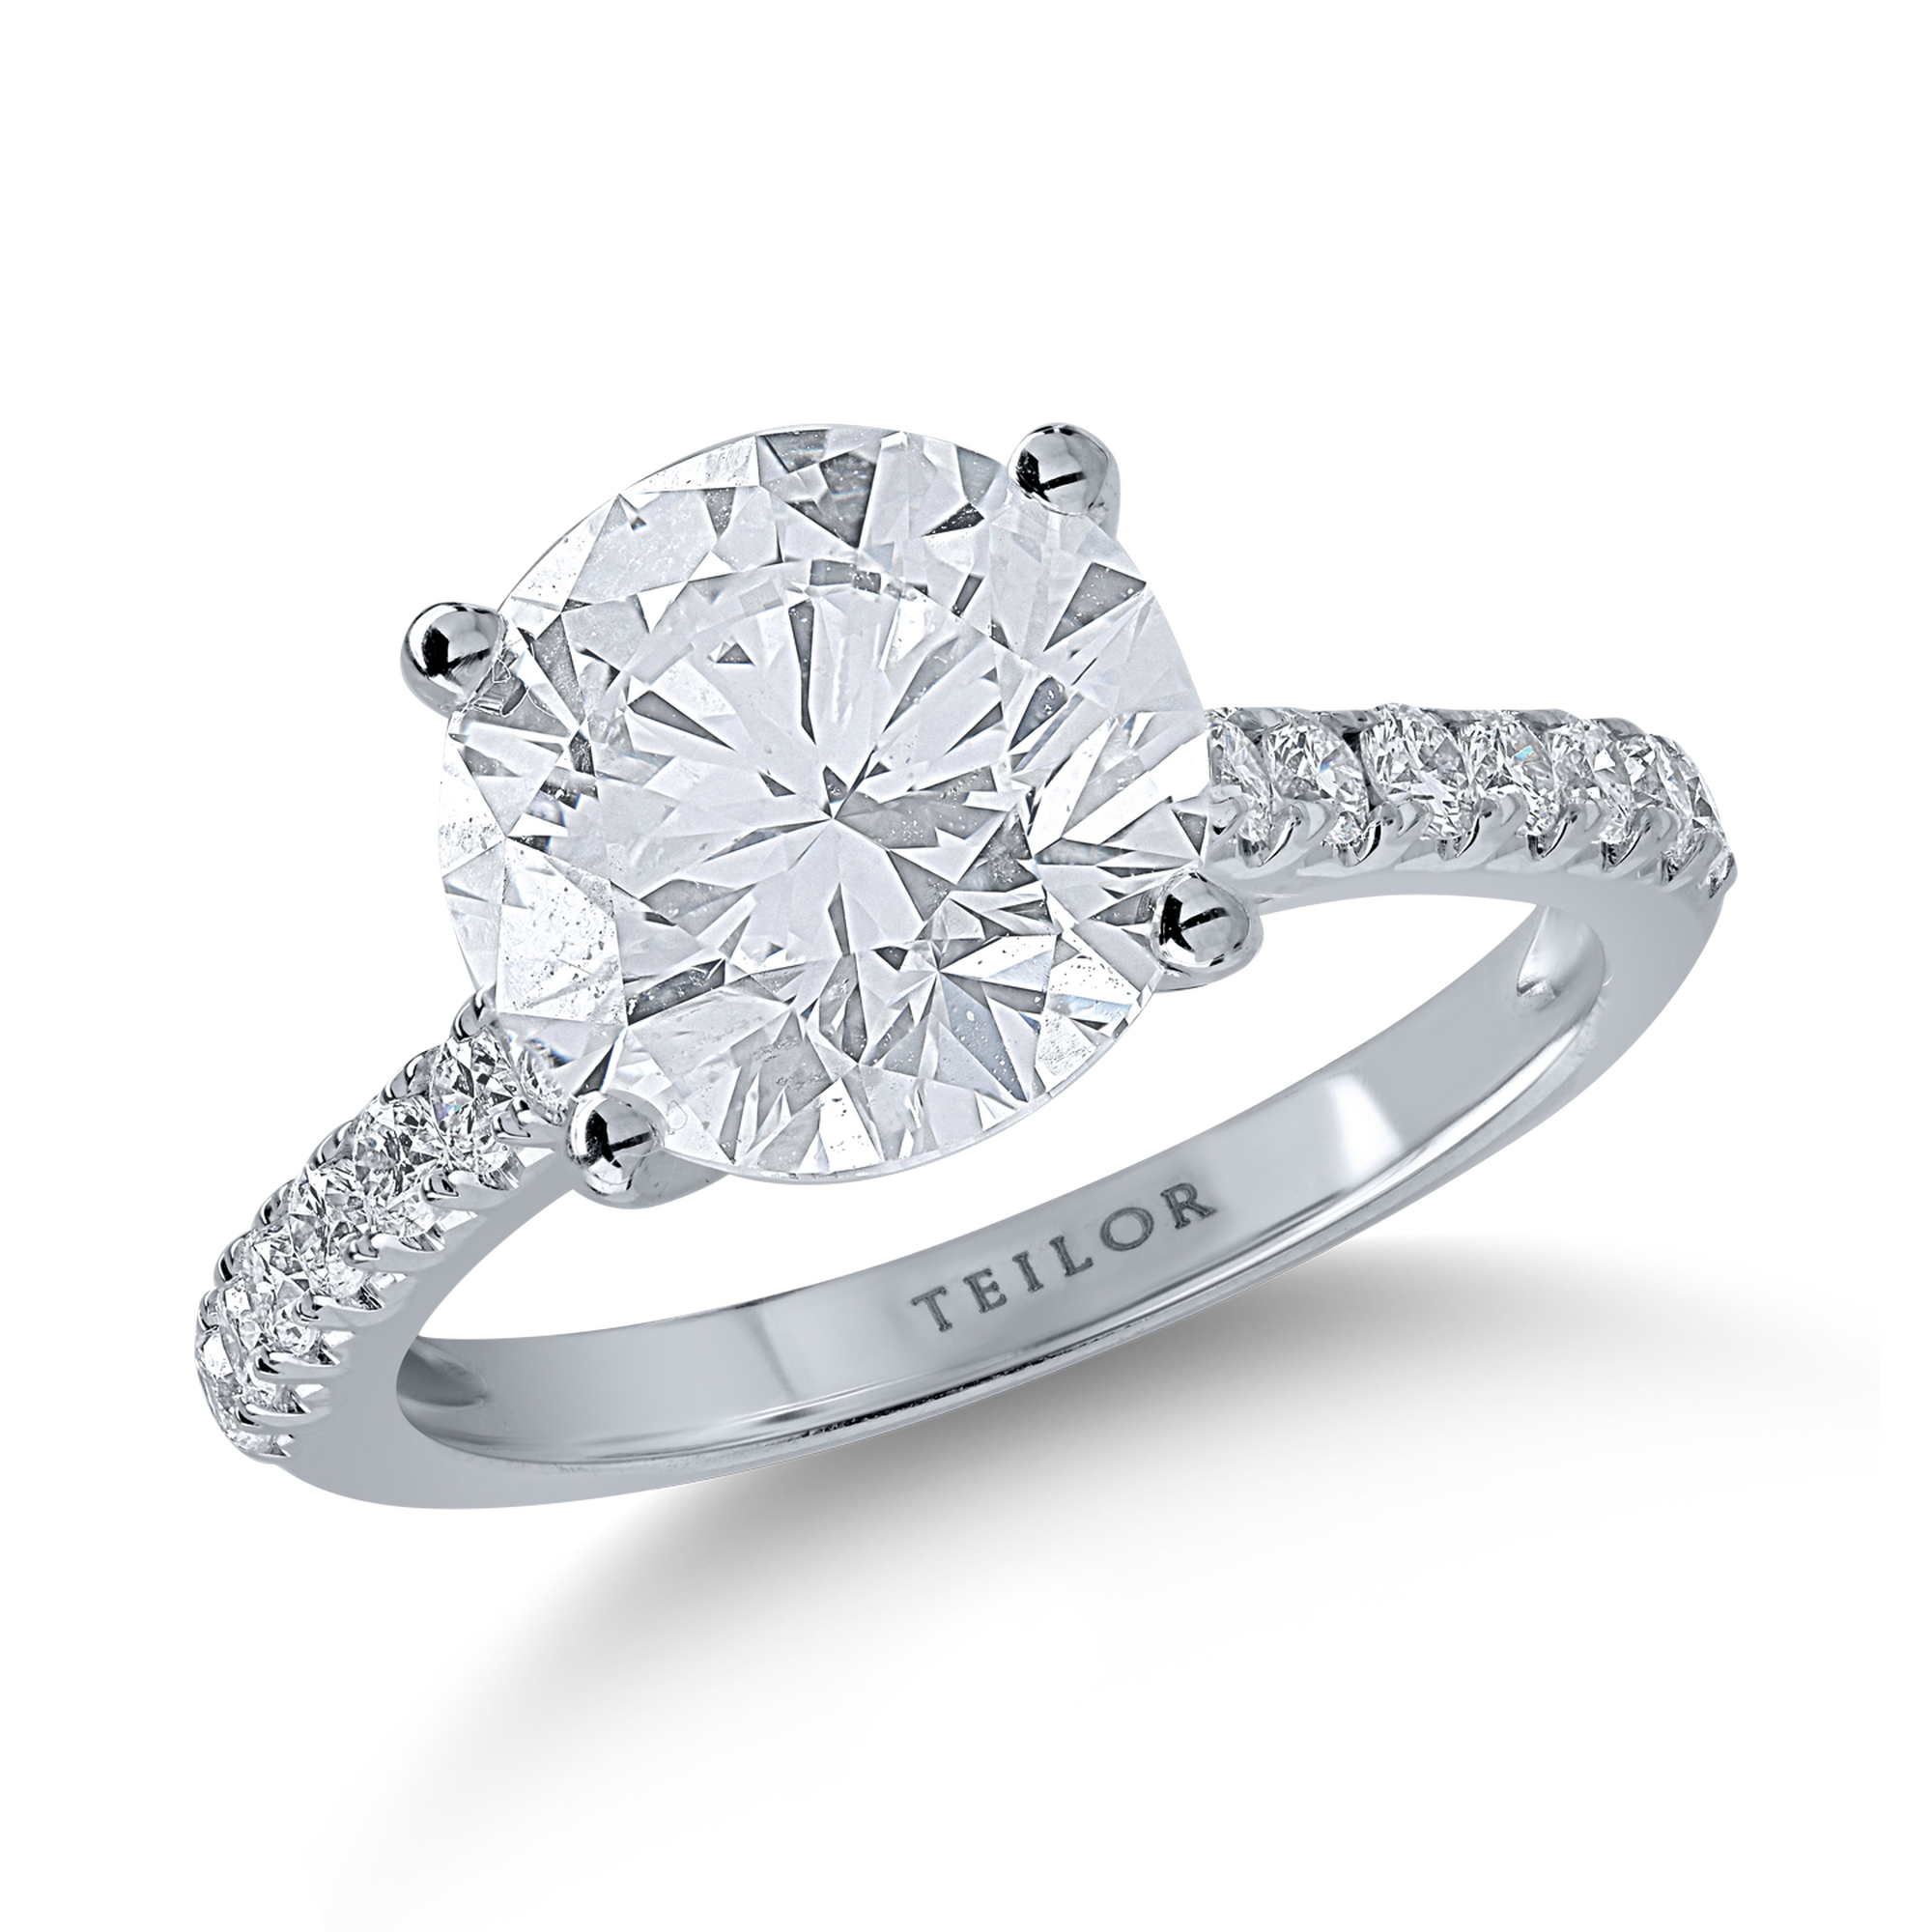 Inel de logodna din aur alb cu un diamant central de 3.6ct si diamante pave de 0.4ct image4